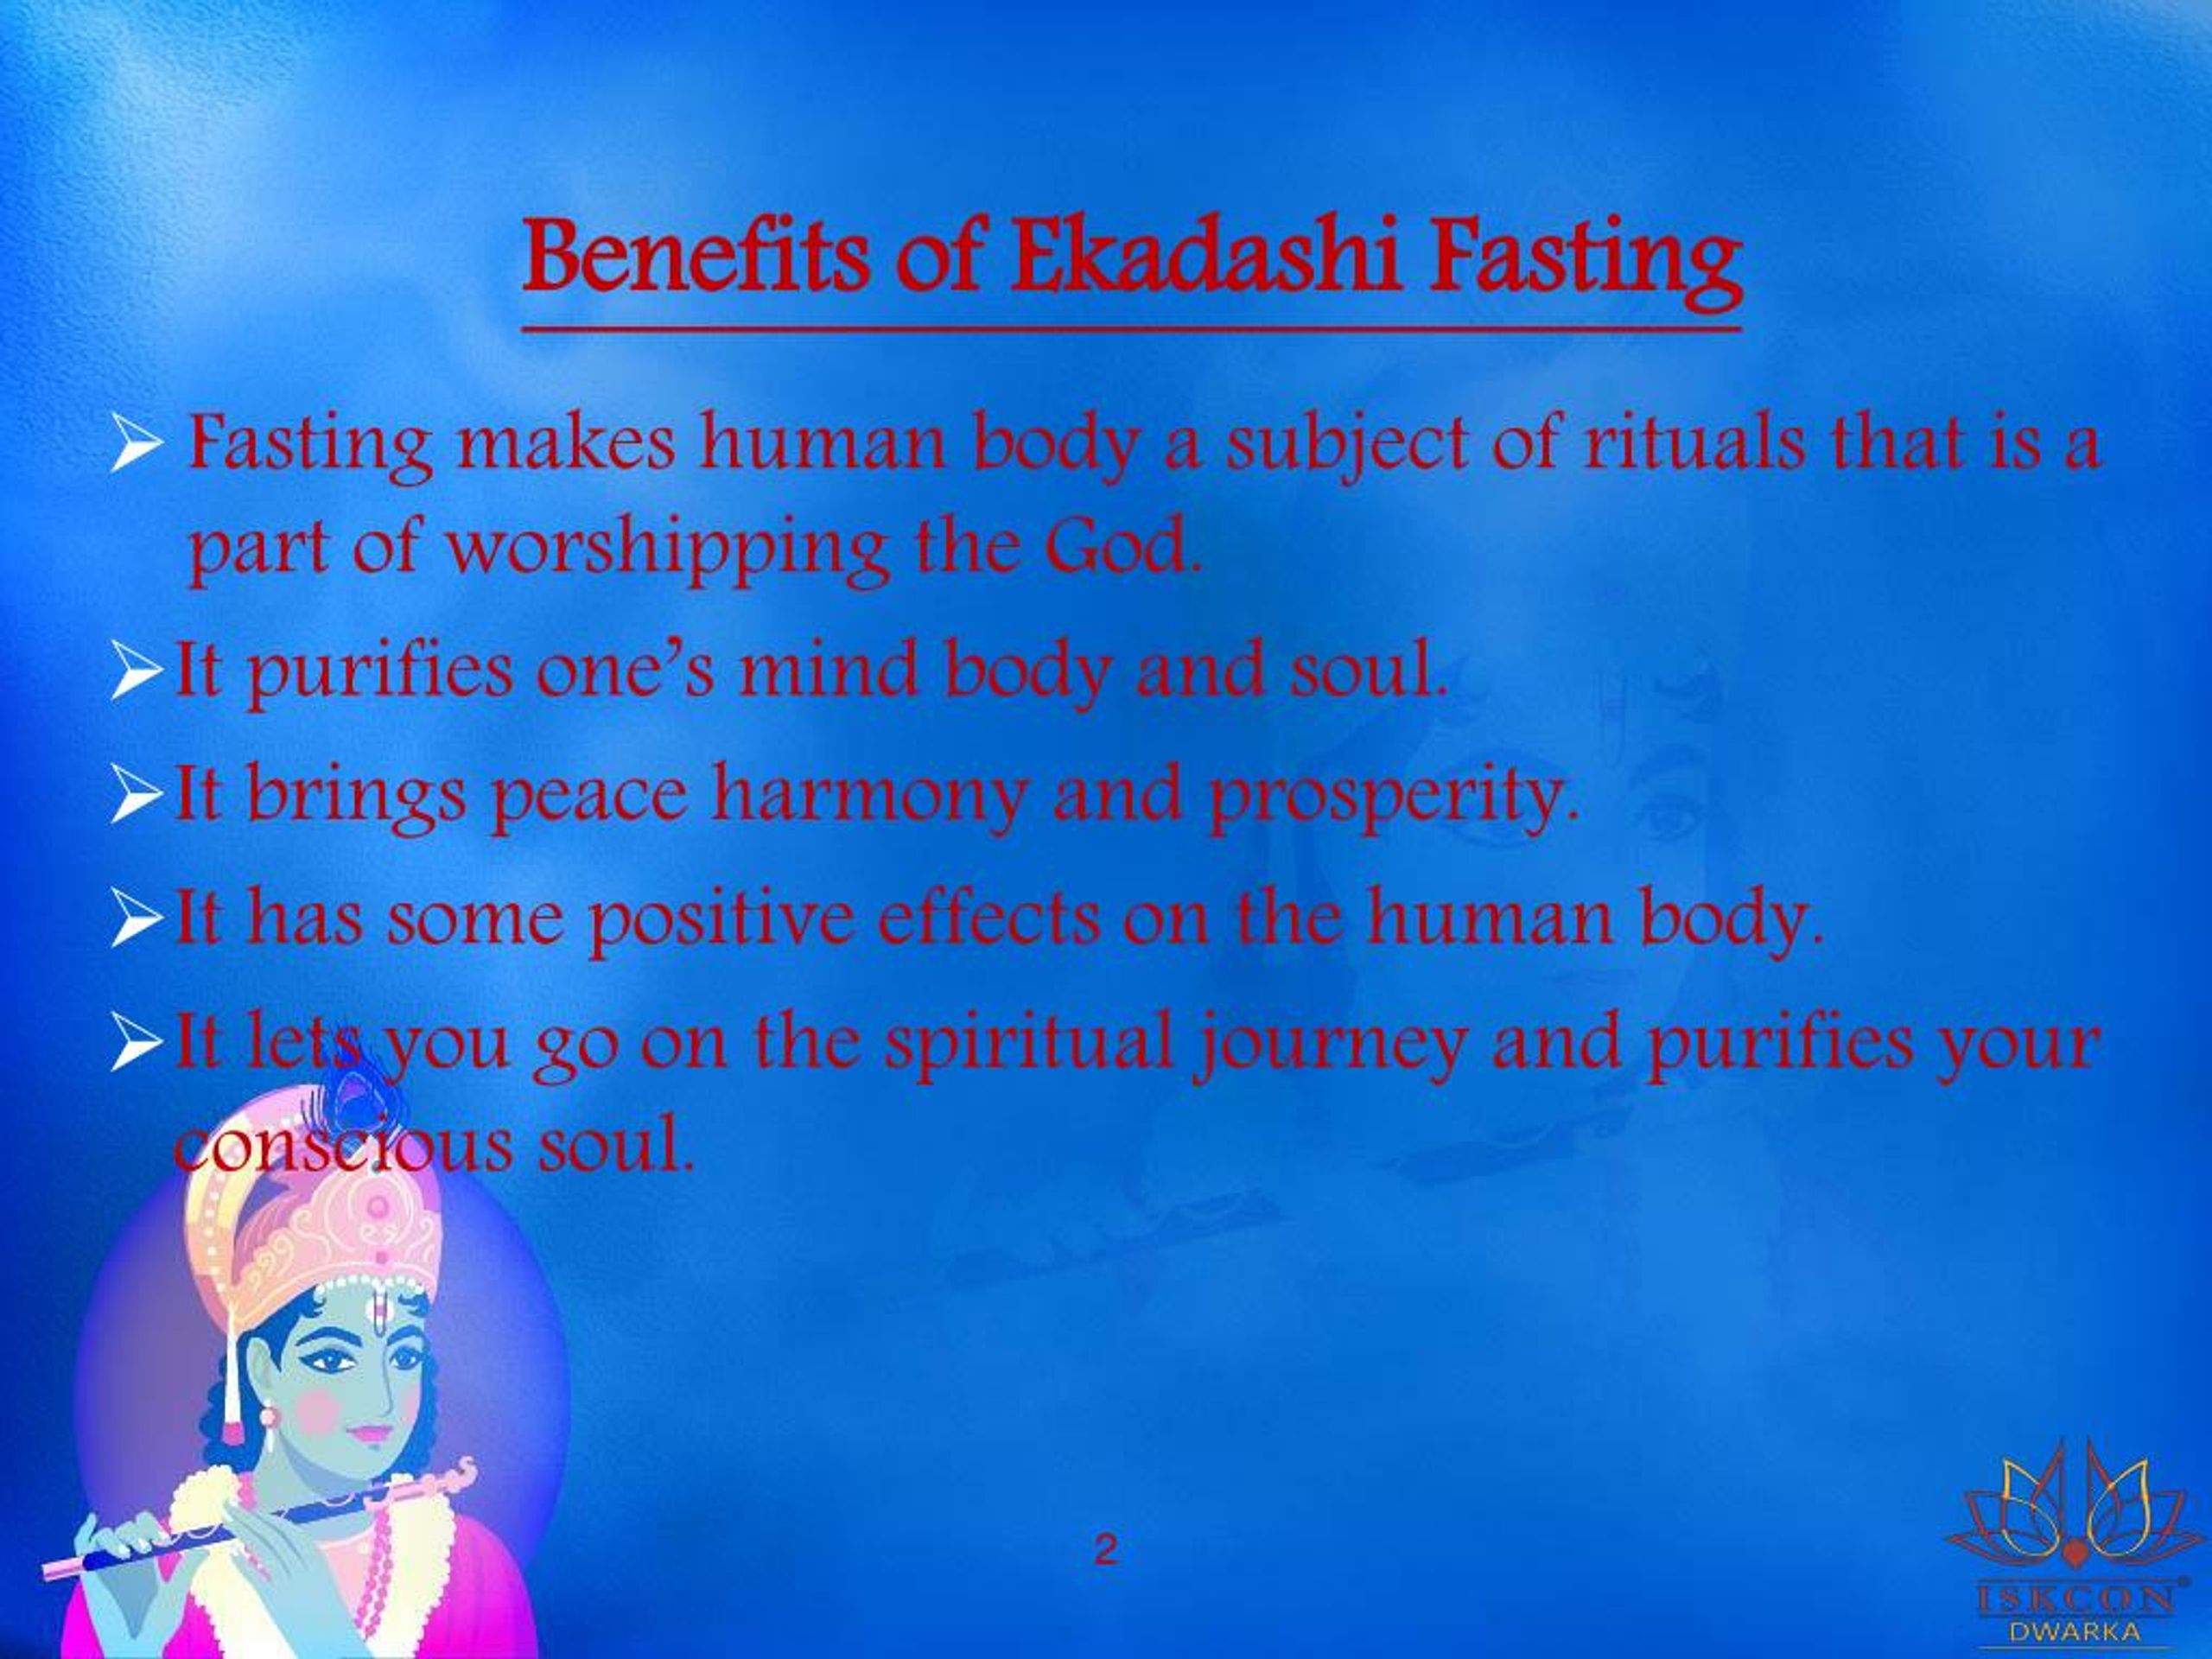 break fasting meaning